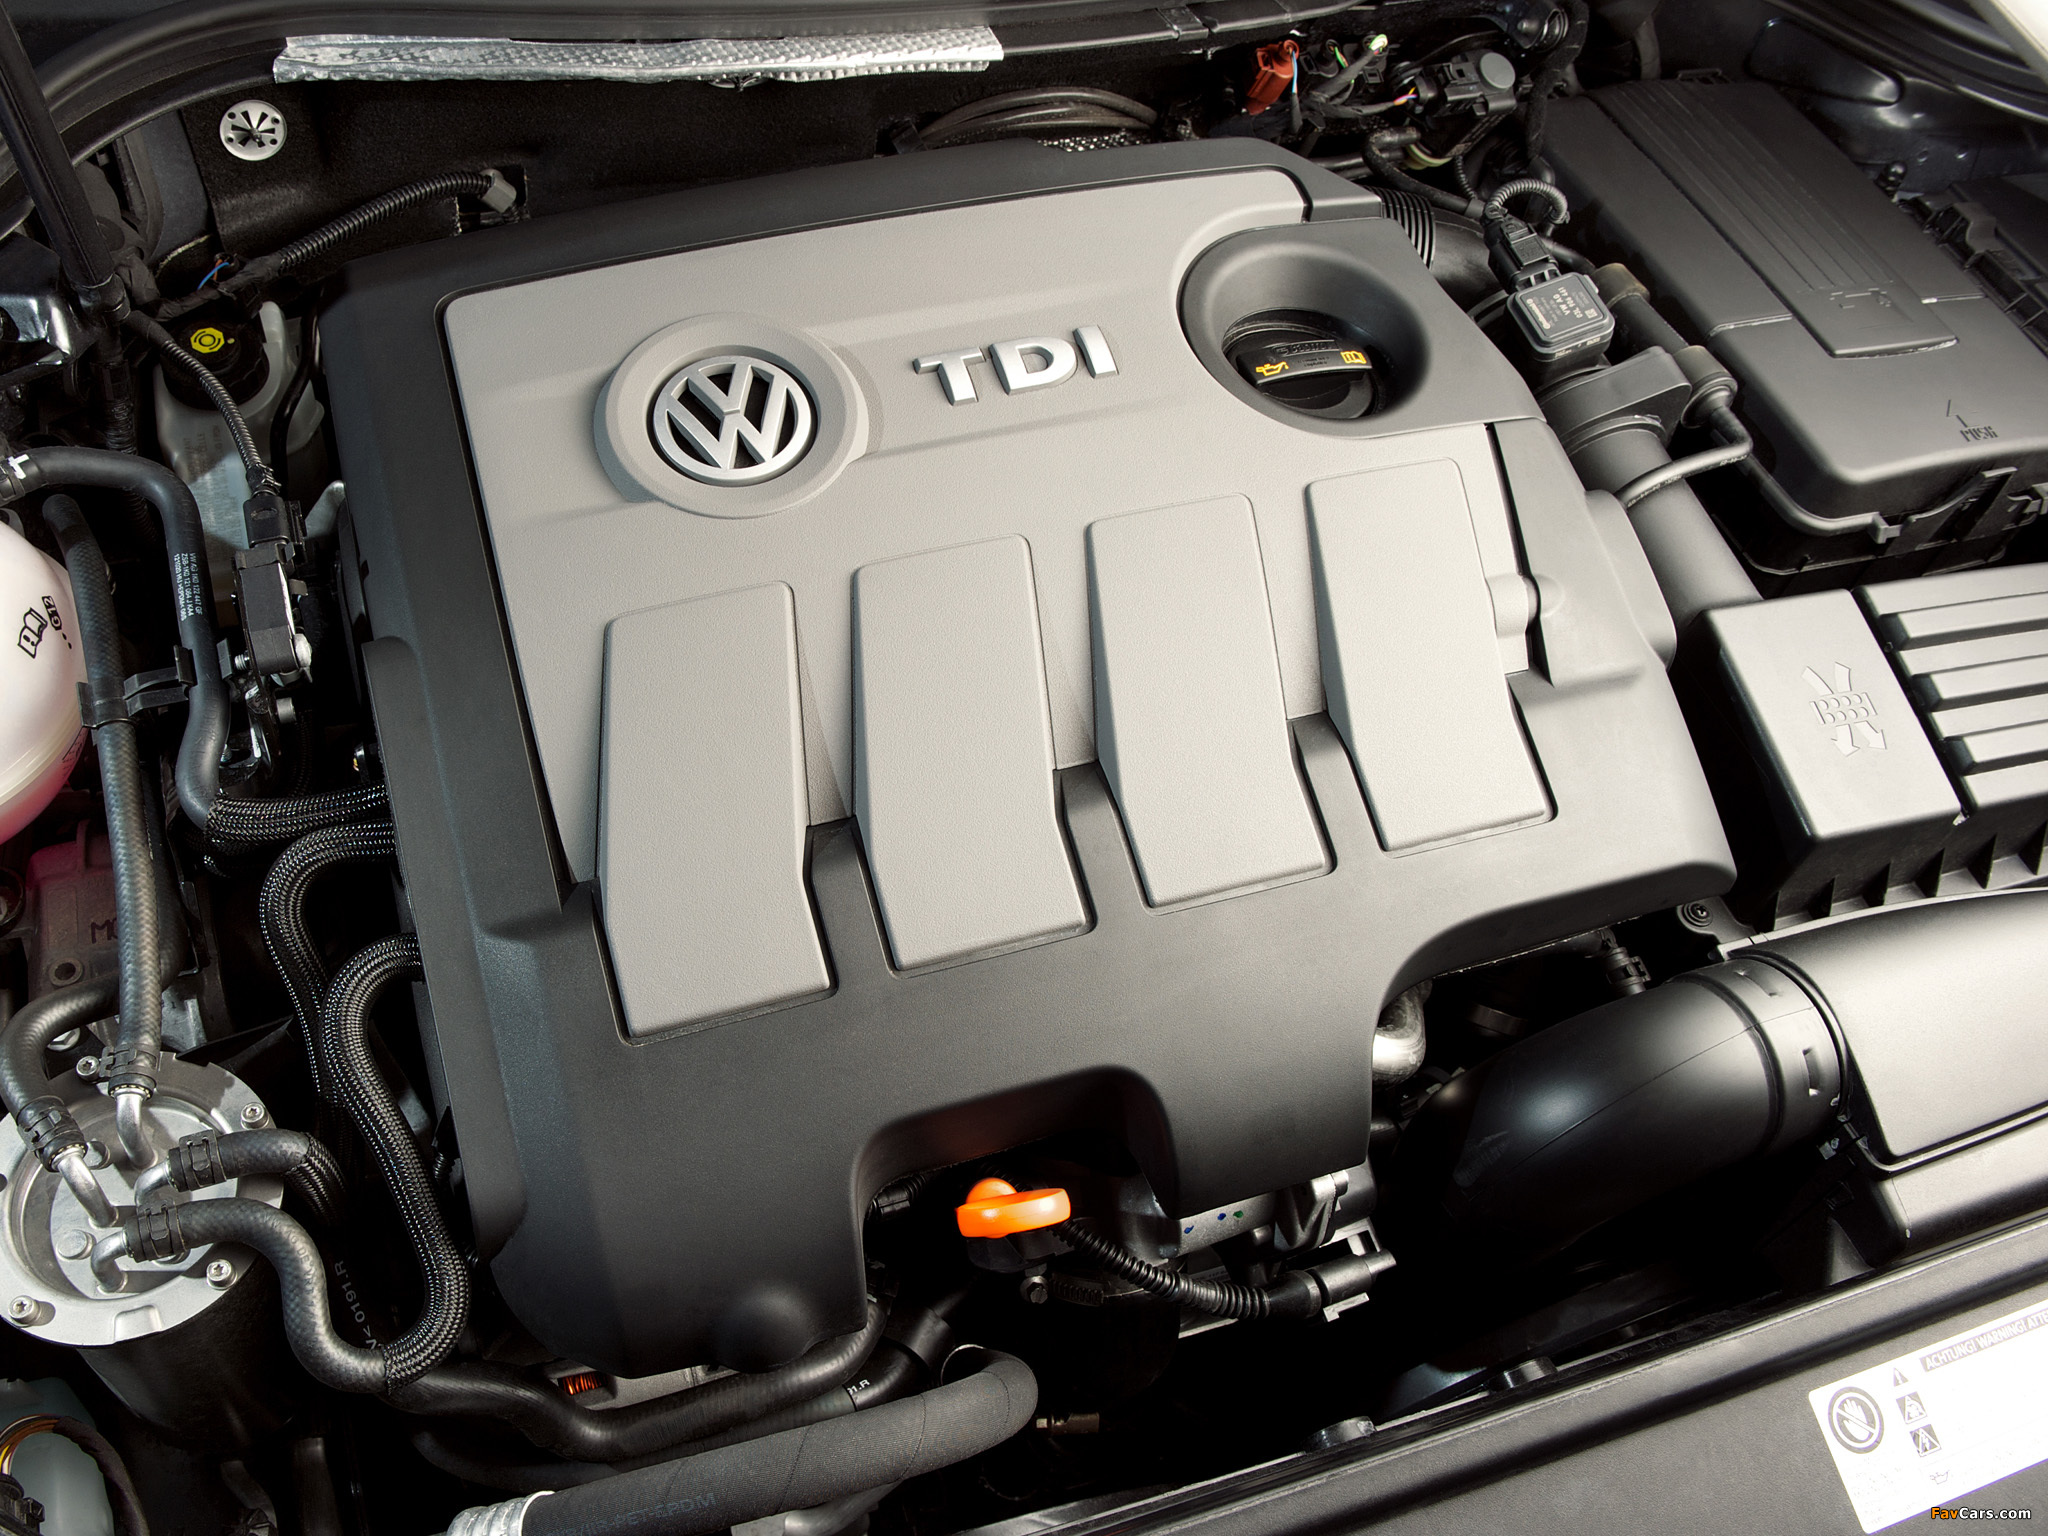 Двигатель б фольксваген дизель. Volkswagen Passat b6 2.0 TDI моторы. Двигатель Пассат б6 2.0. Двигатель Volkswagen Passat b6 дизель 2.0. Двигатель Фольксваген Пассат б6 2.0 FSI.